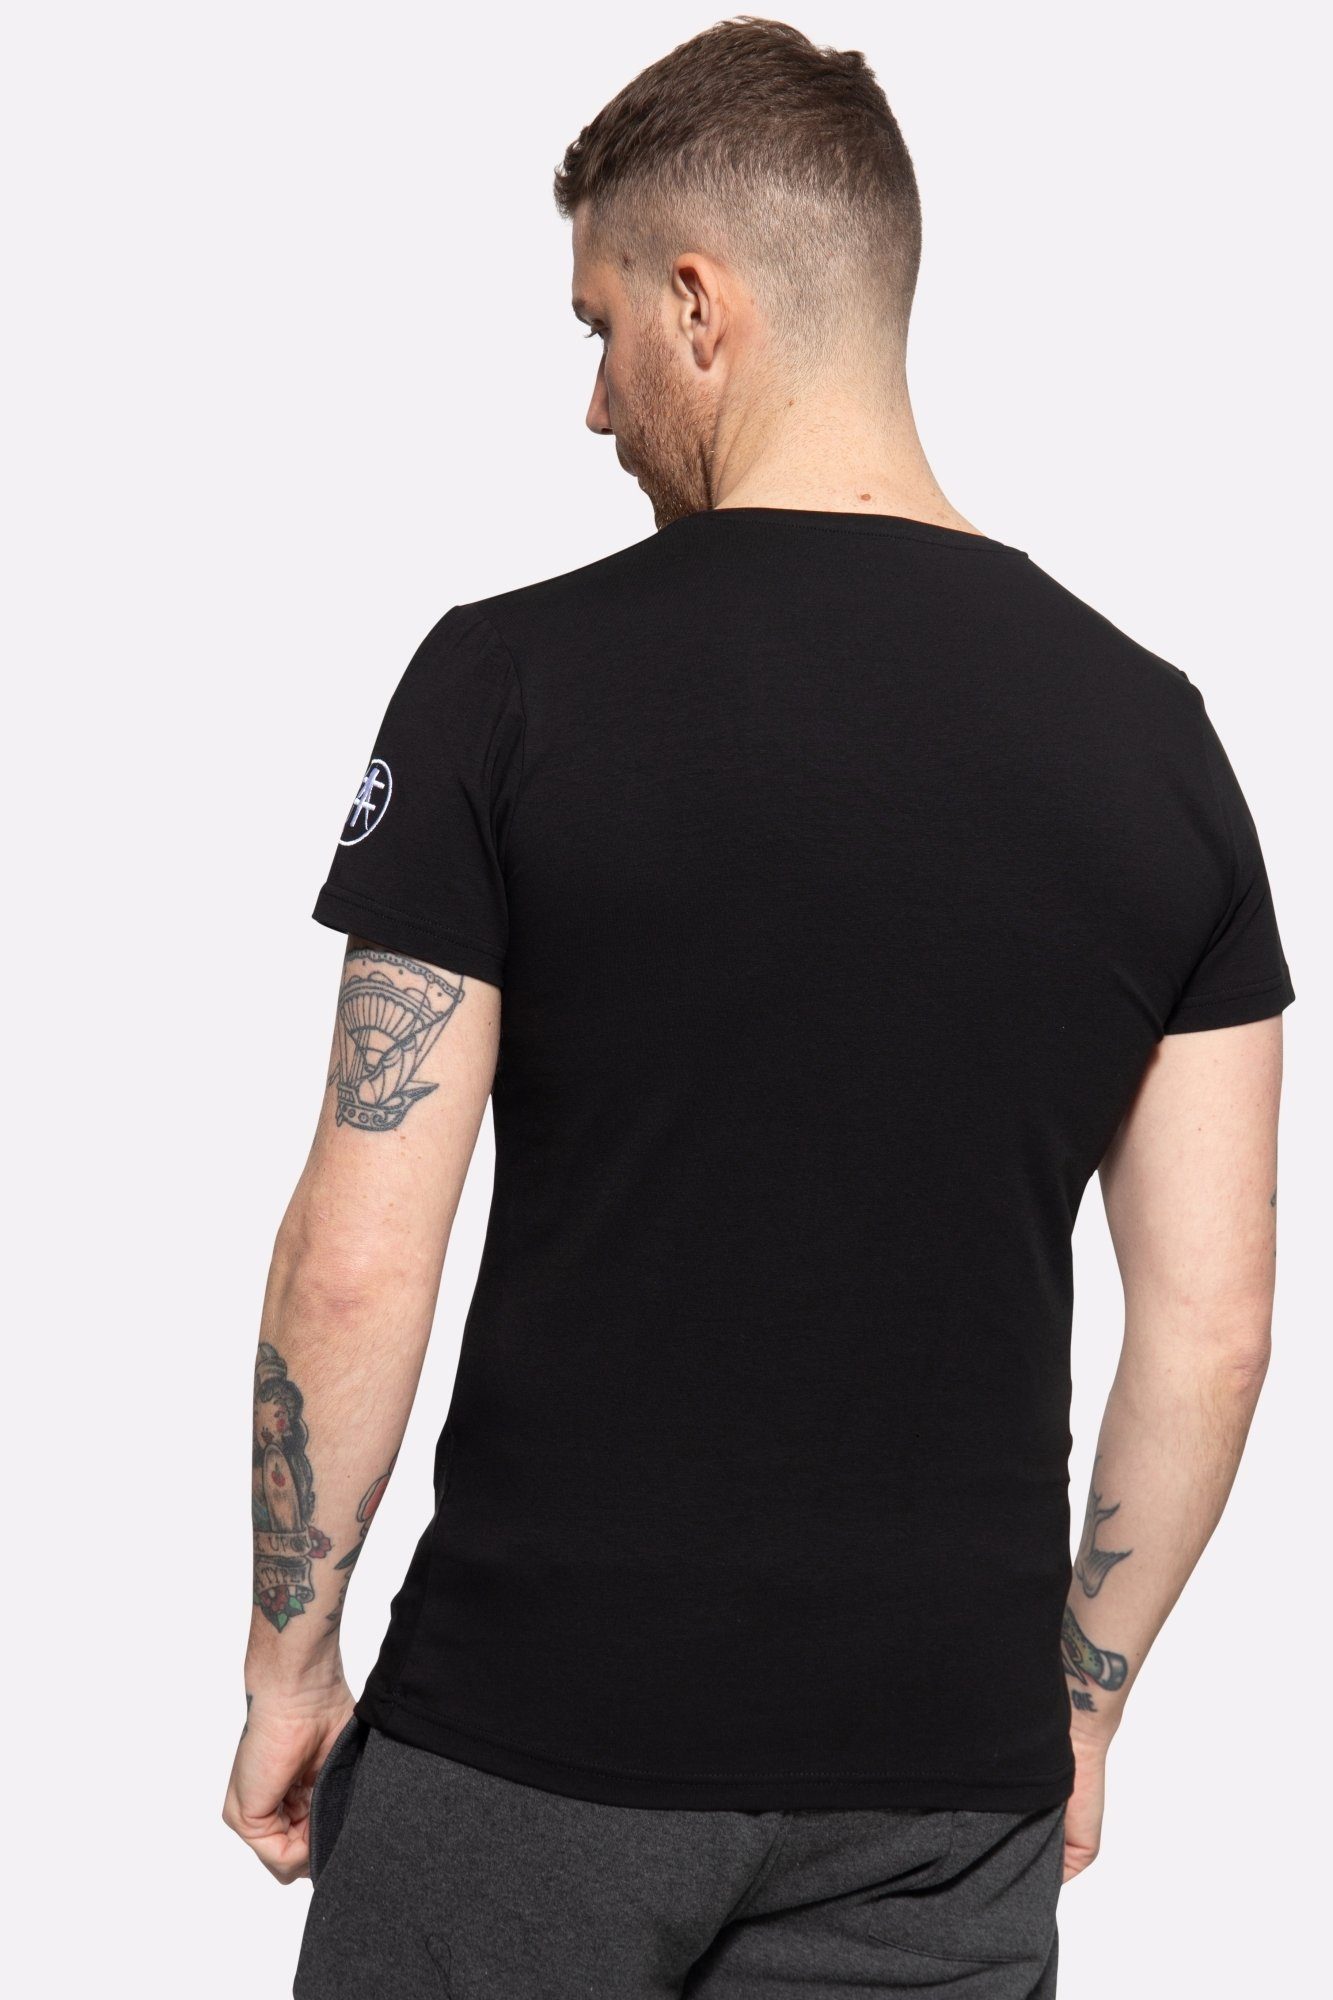 Kontrast-Print Fighters Gladiator schwarz coolem T-Shirt mit Tanaka Akito